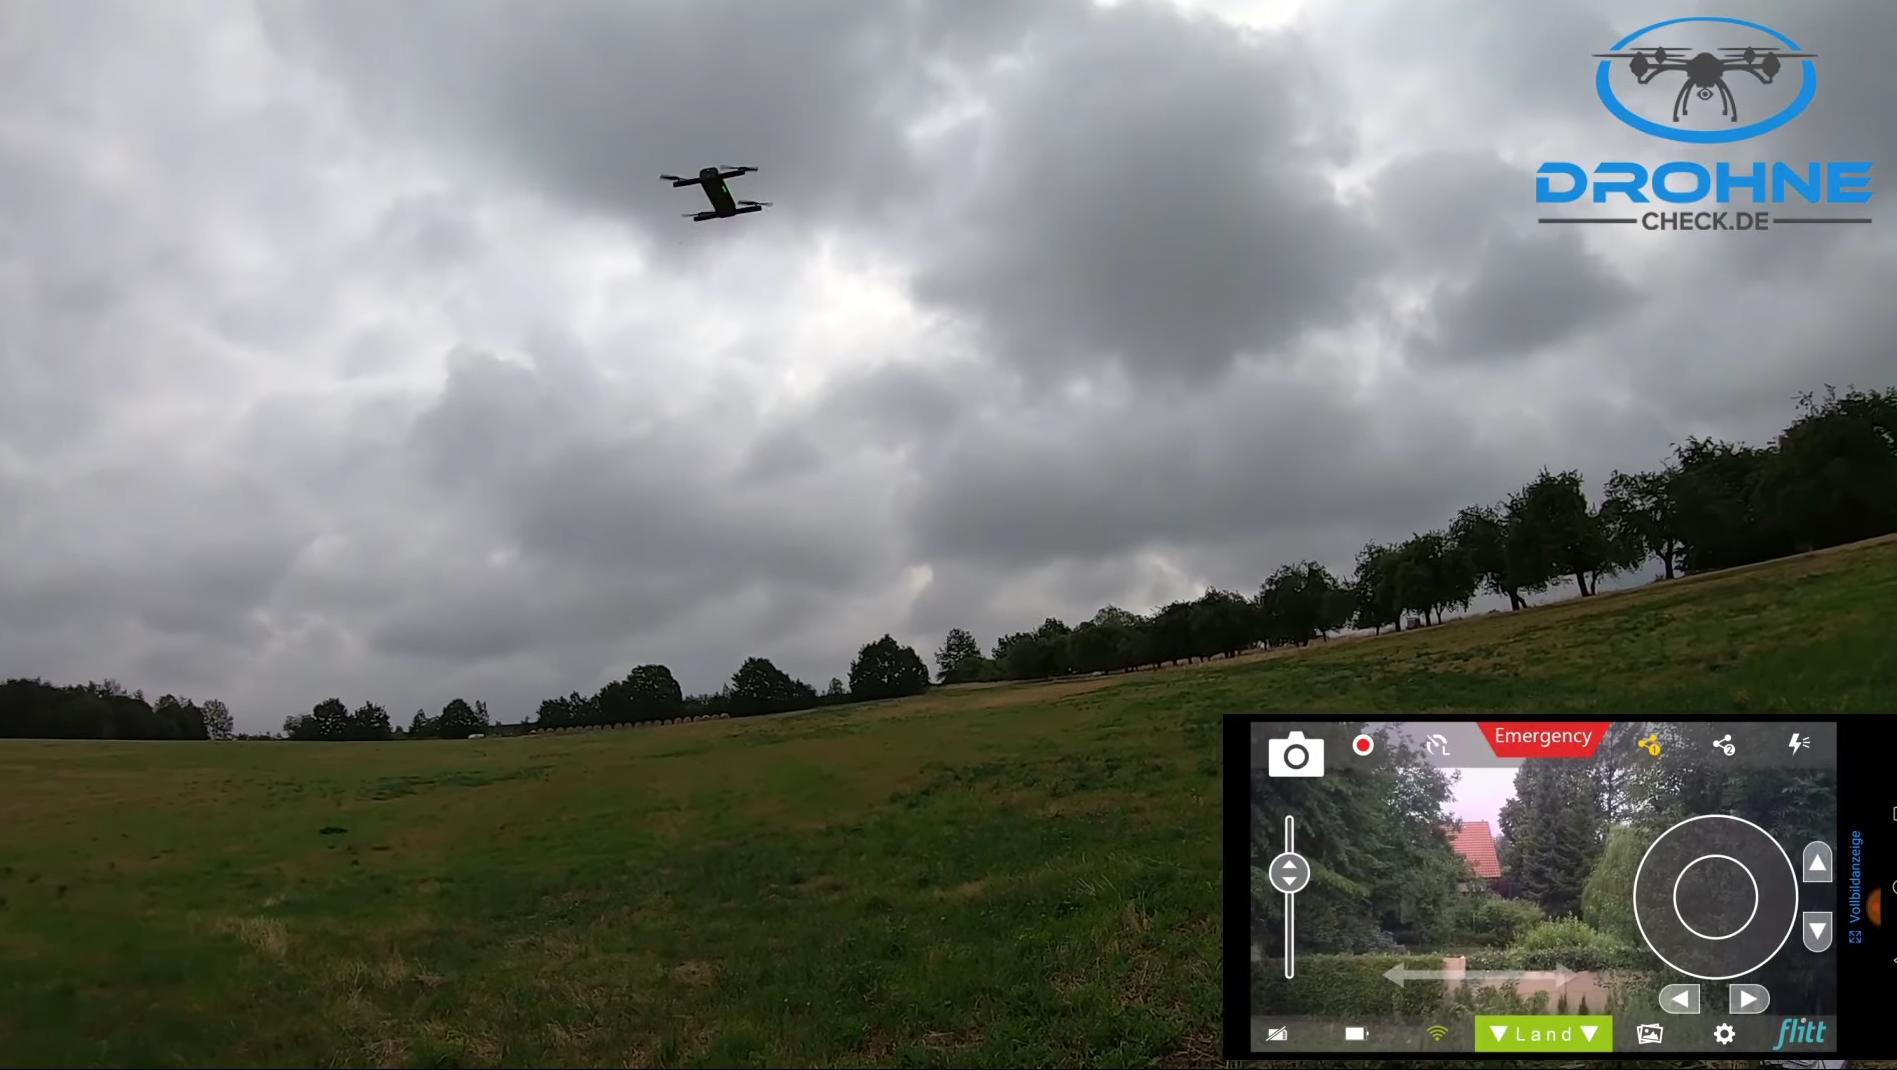 Netto drone in the sky